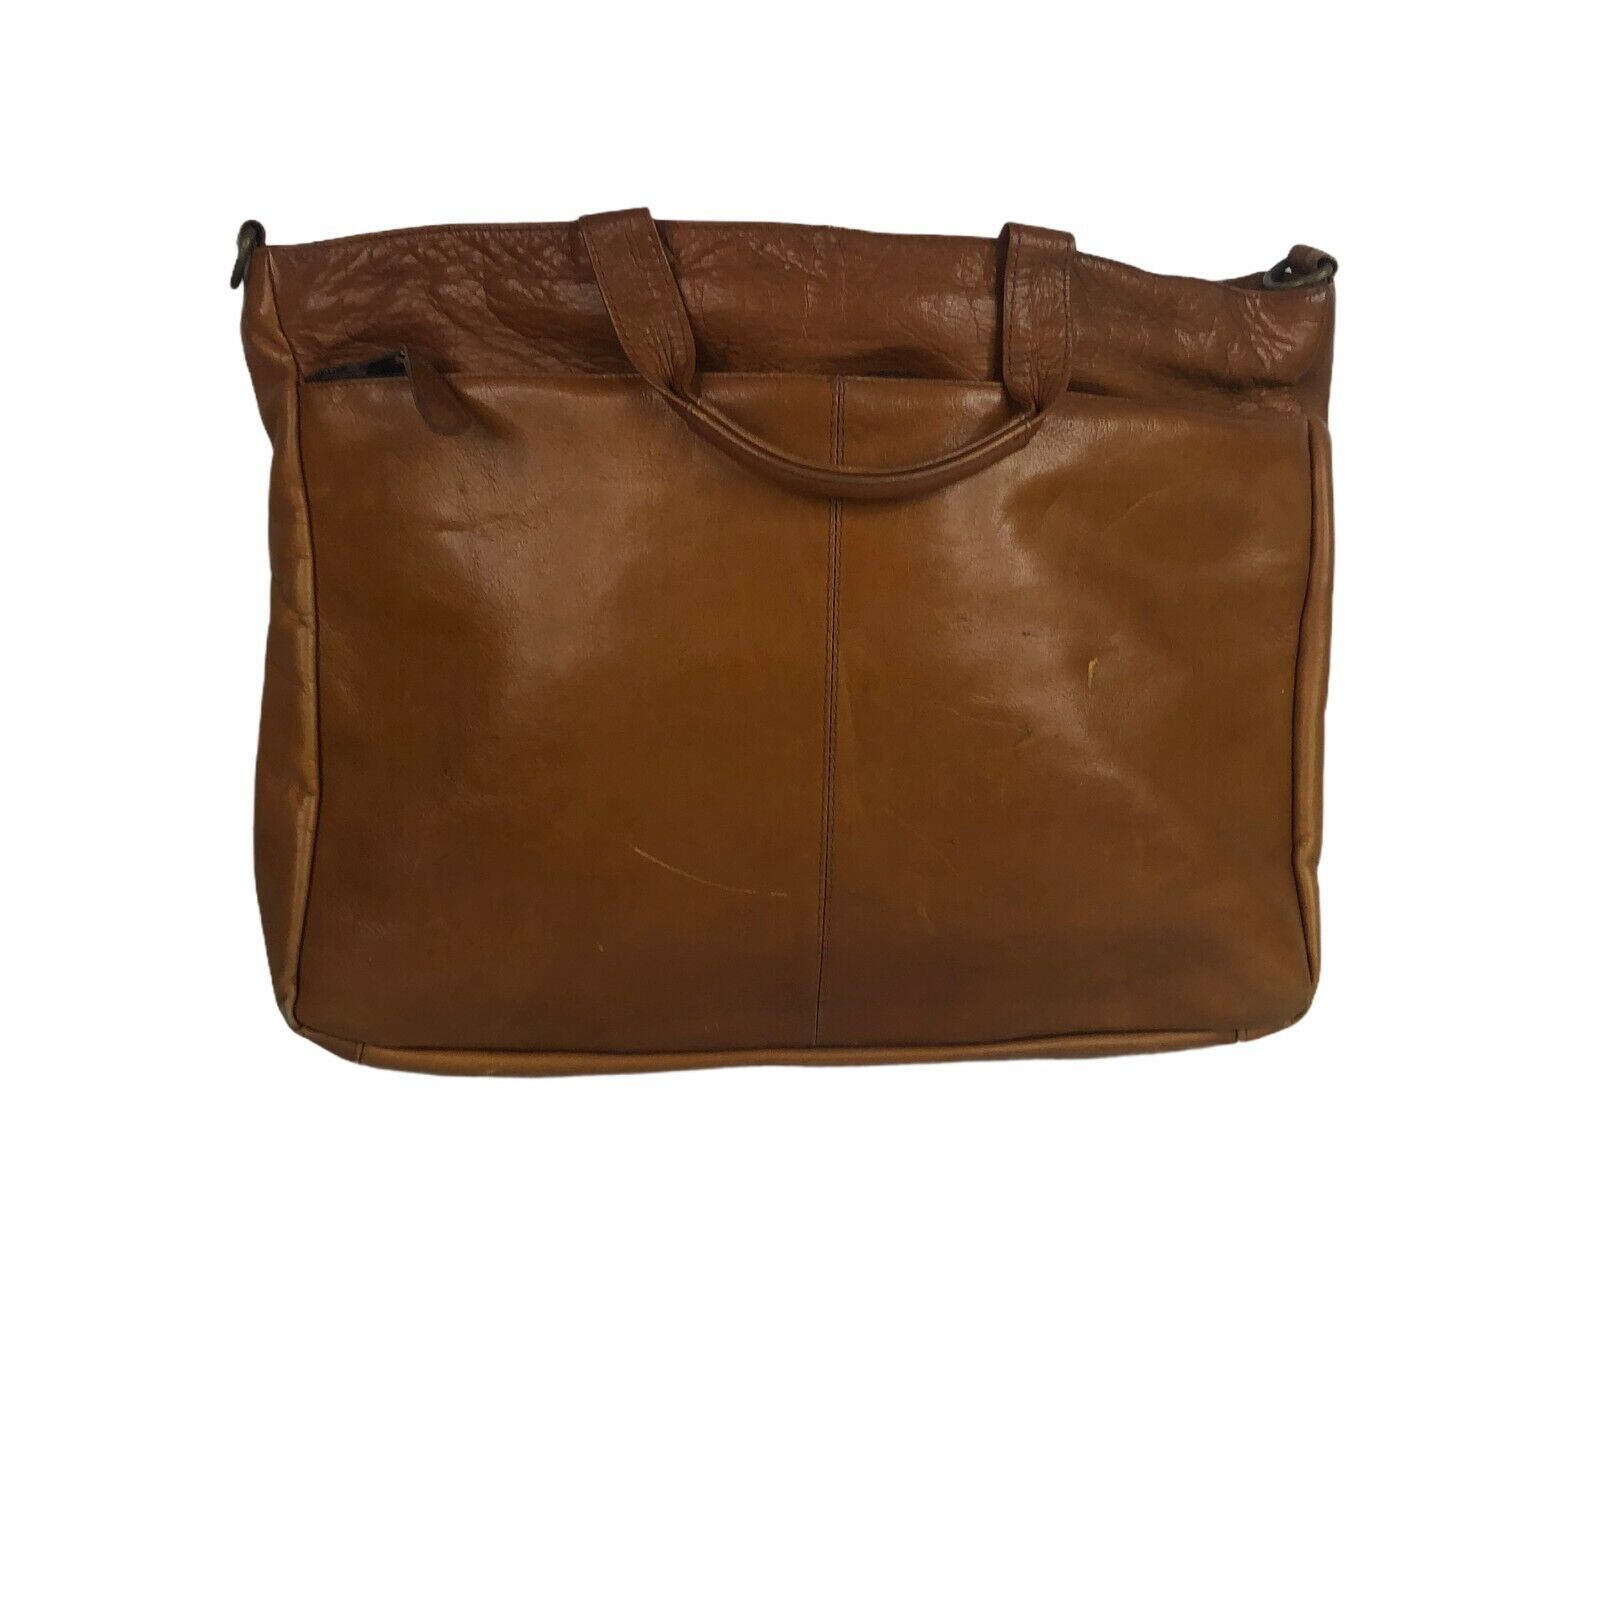 Vintage Latico Leather Briefcase Laptop Bag Tan Camel Top Grain